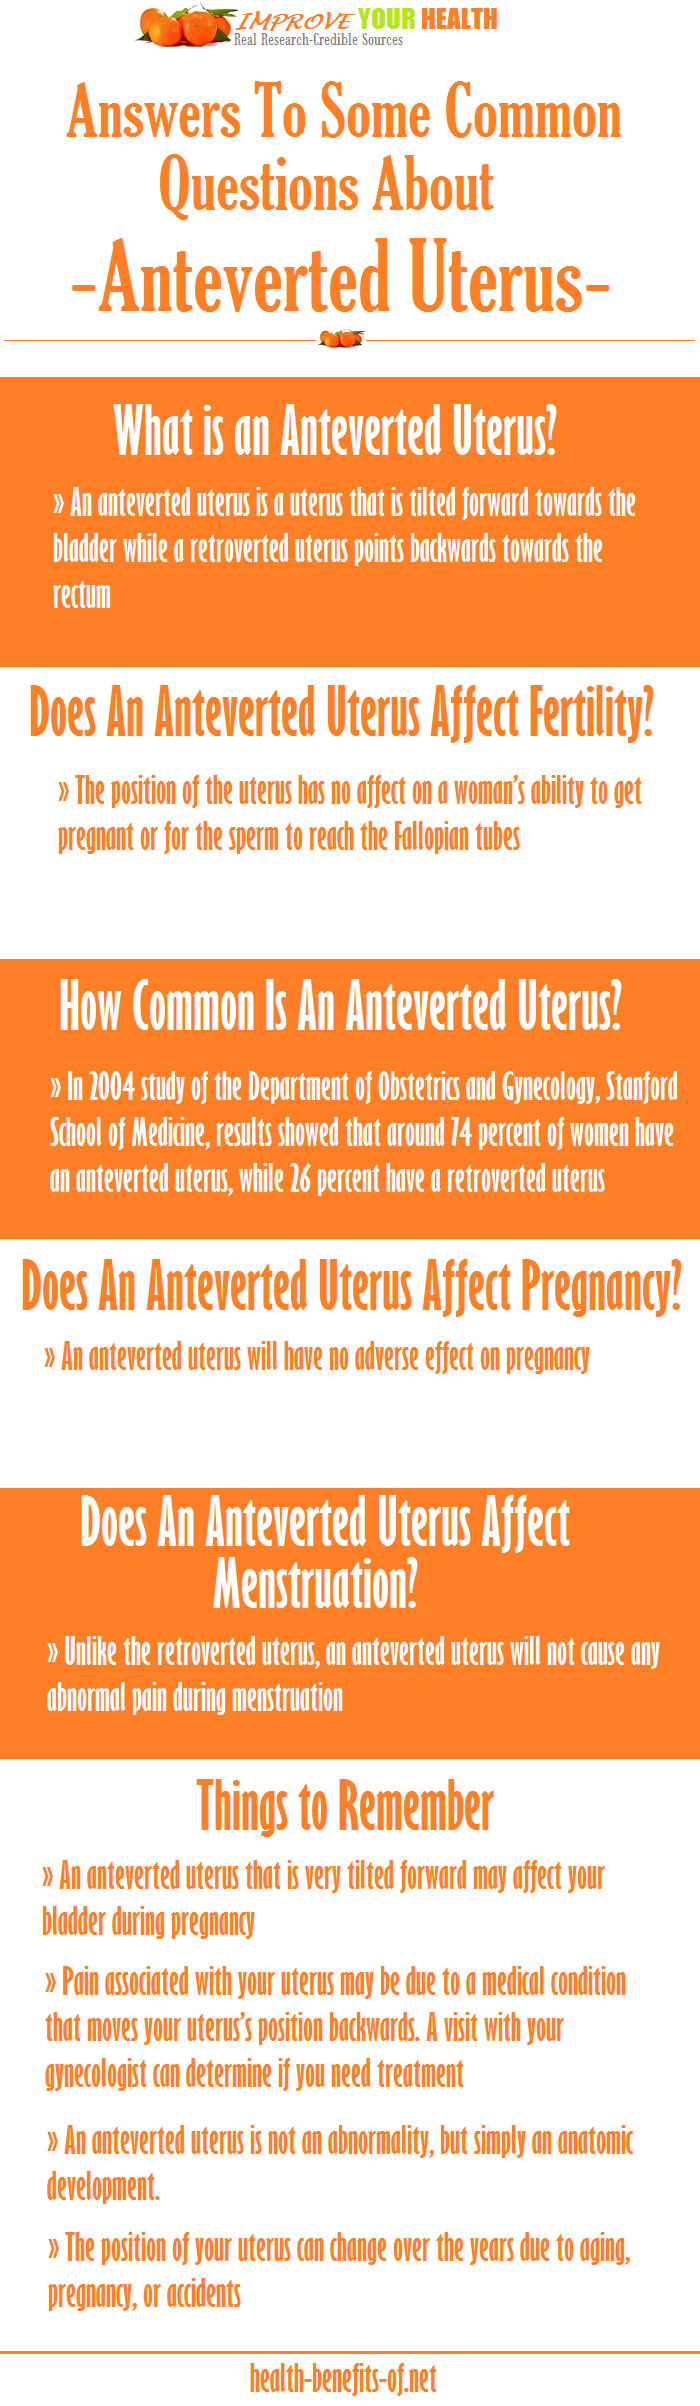 Anteverted Uterus